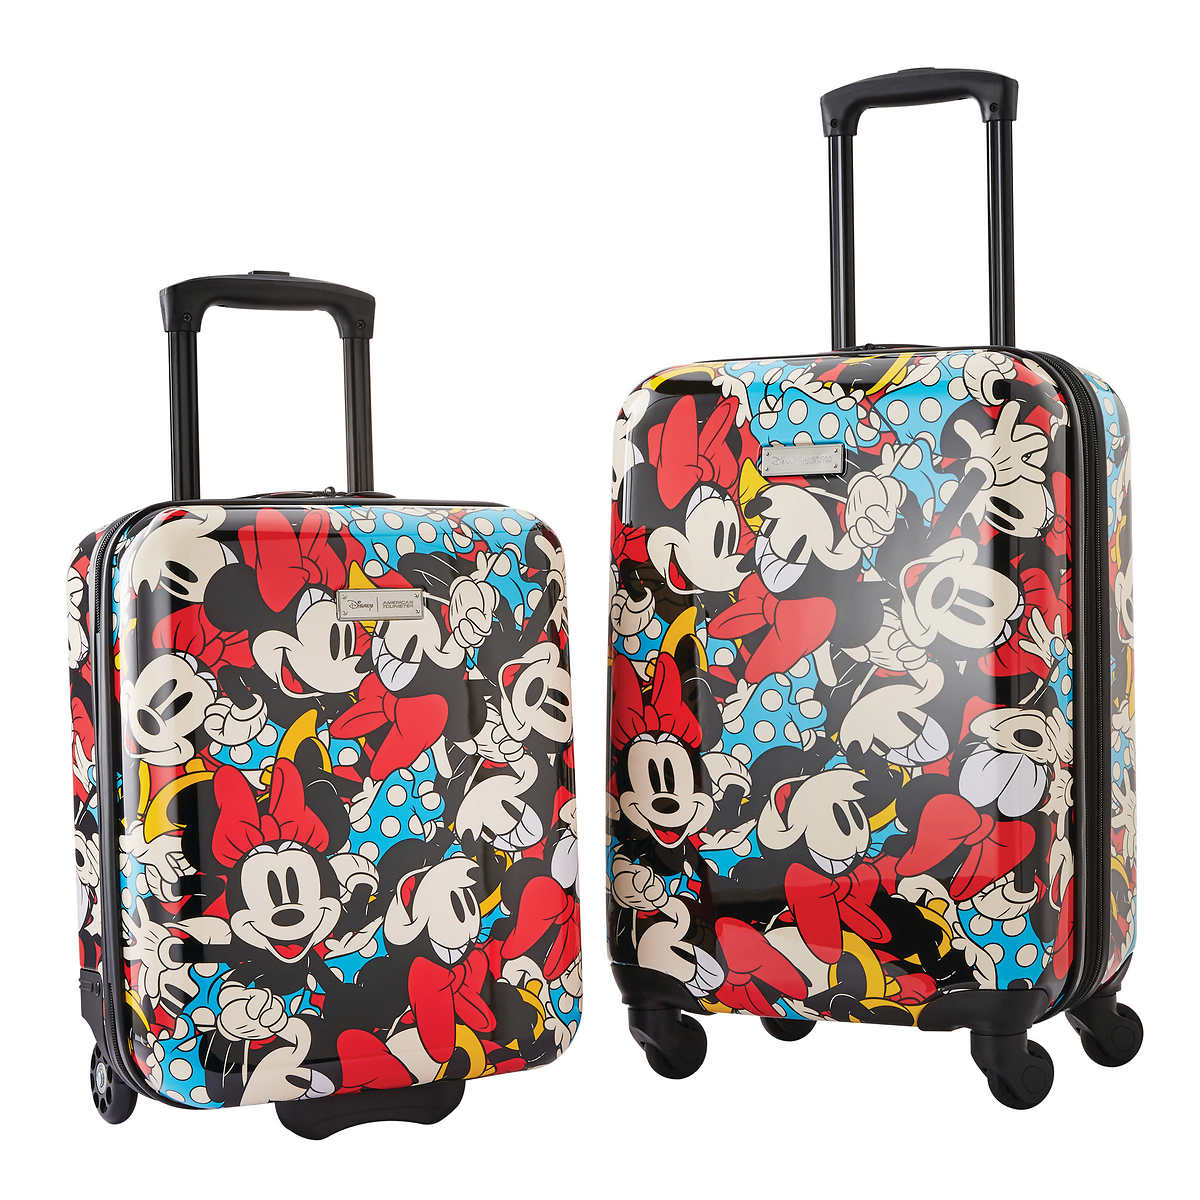 American Tourister Disney Hardside Carry On 2 Piece Luggage Set